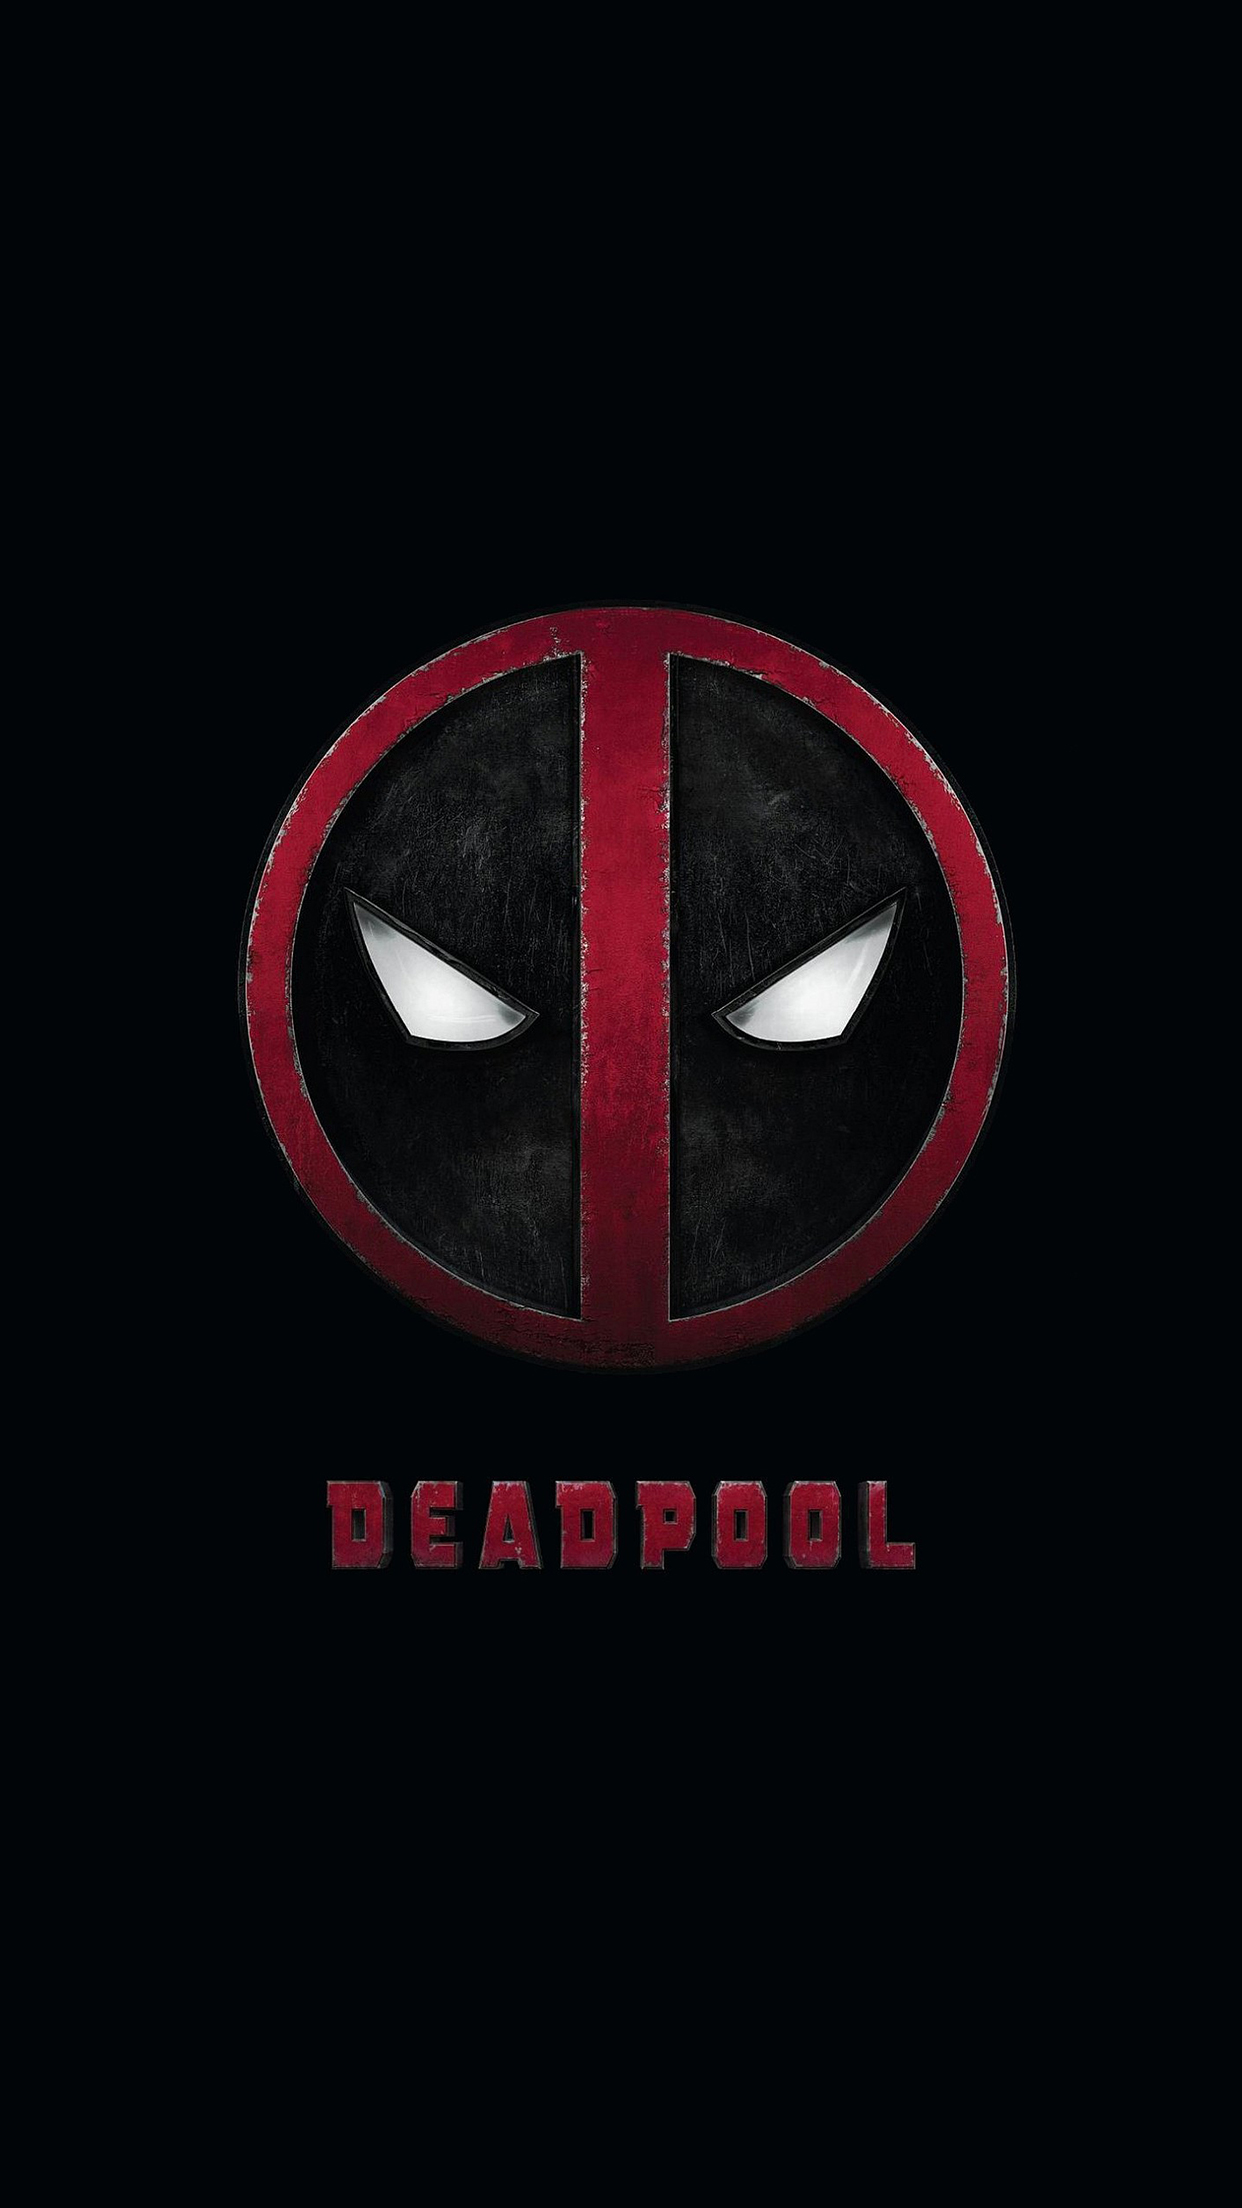 Deadpool Logo Wallpaper Iphone My Blog